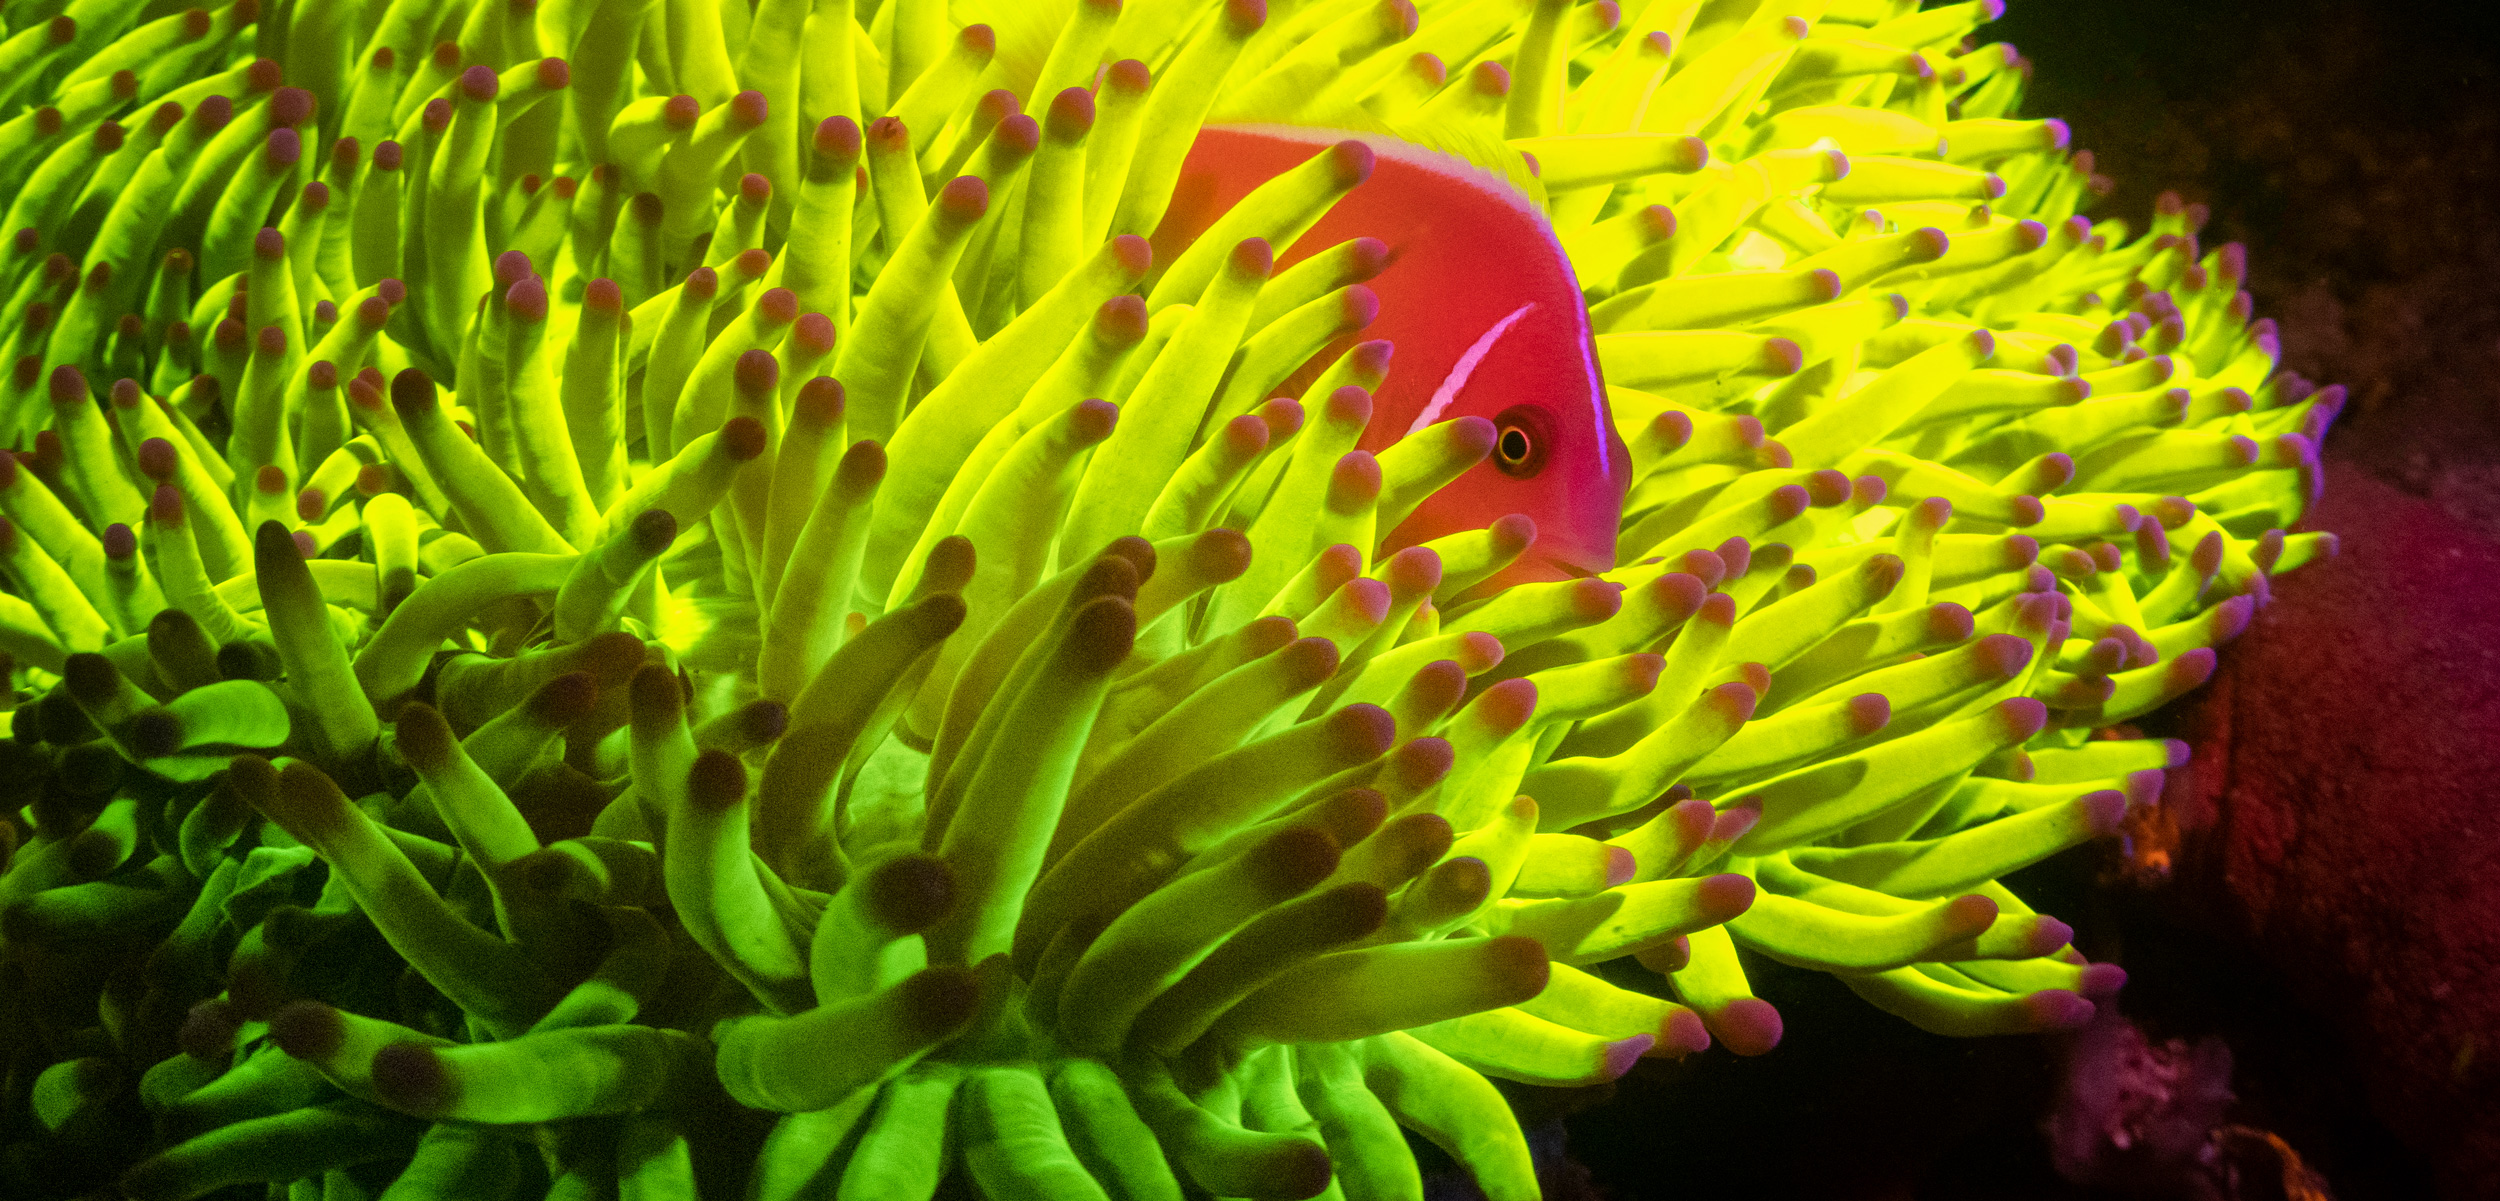 fluorescent photo of pink anemonefish